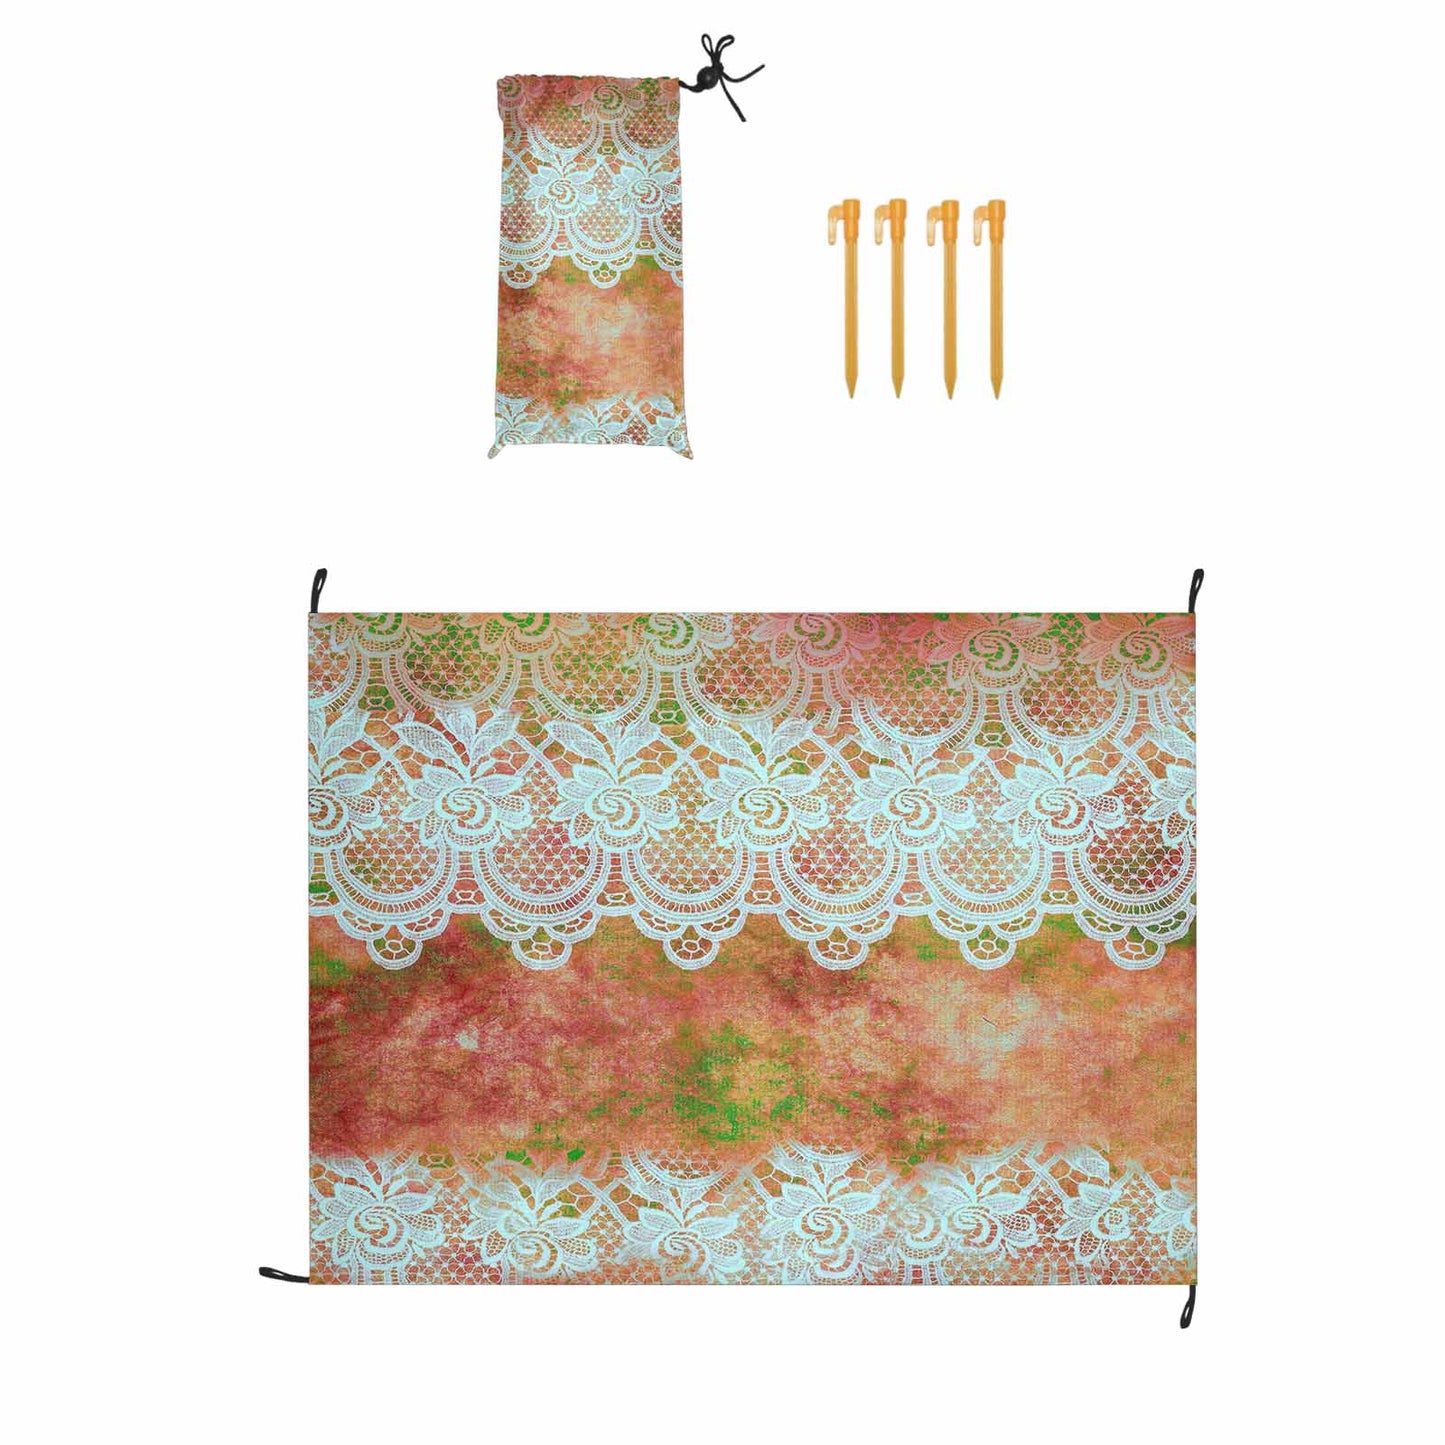 Victorian lace print waterproof picnic mat, 69 x 55in, design 31